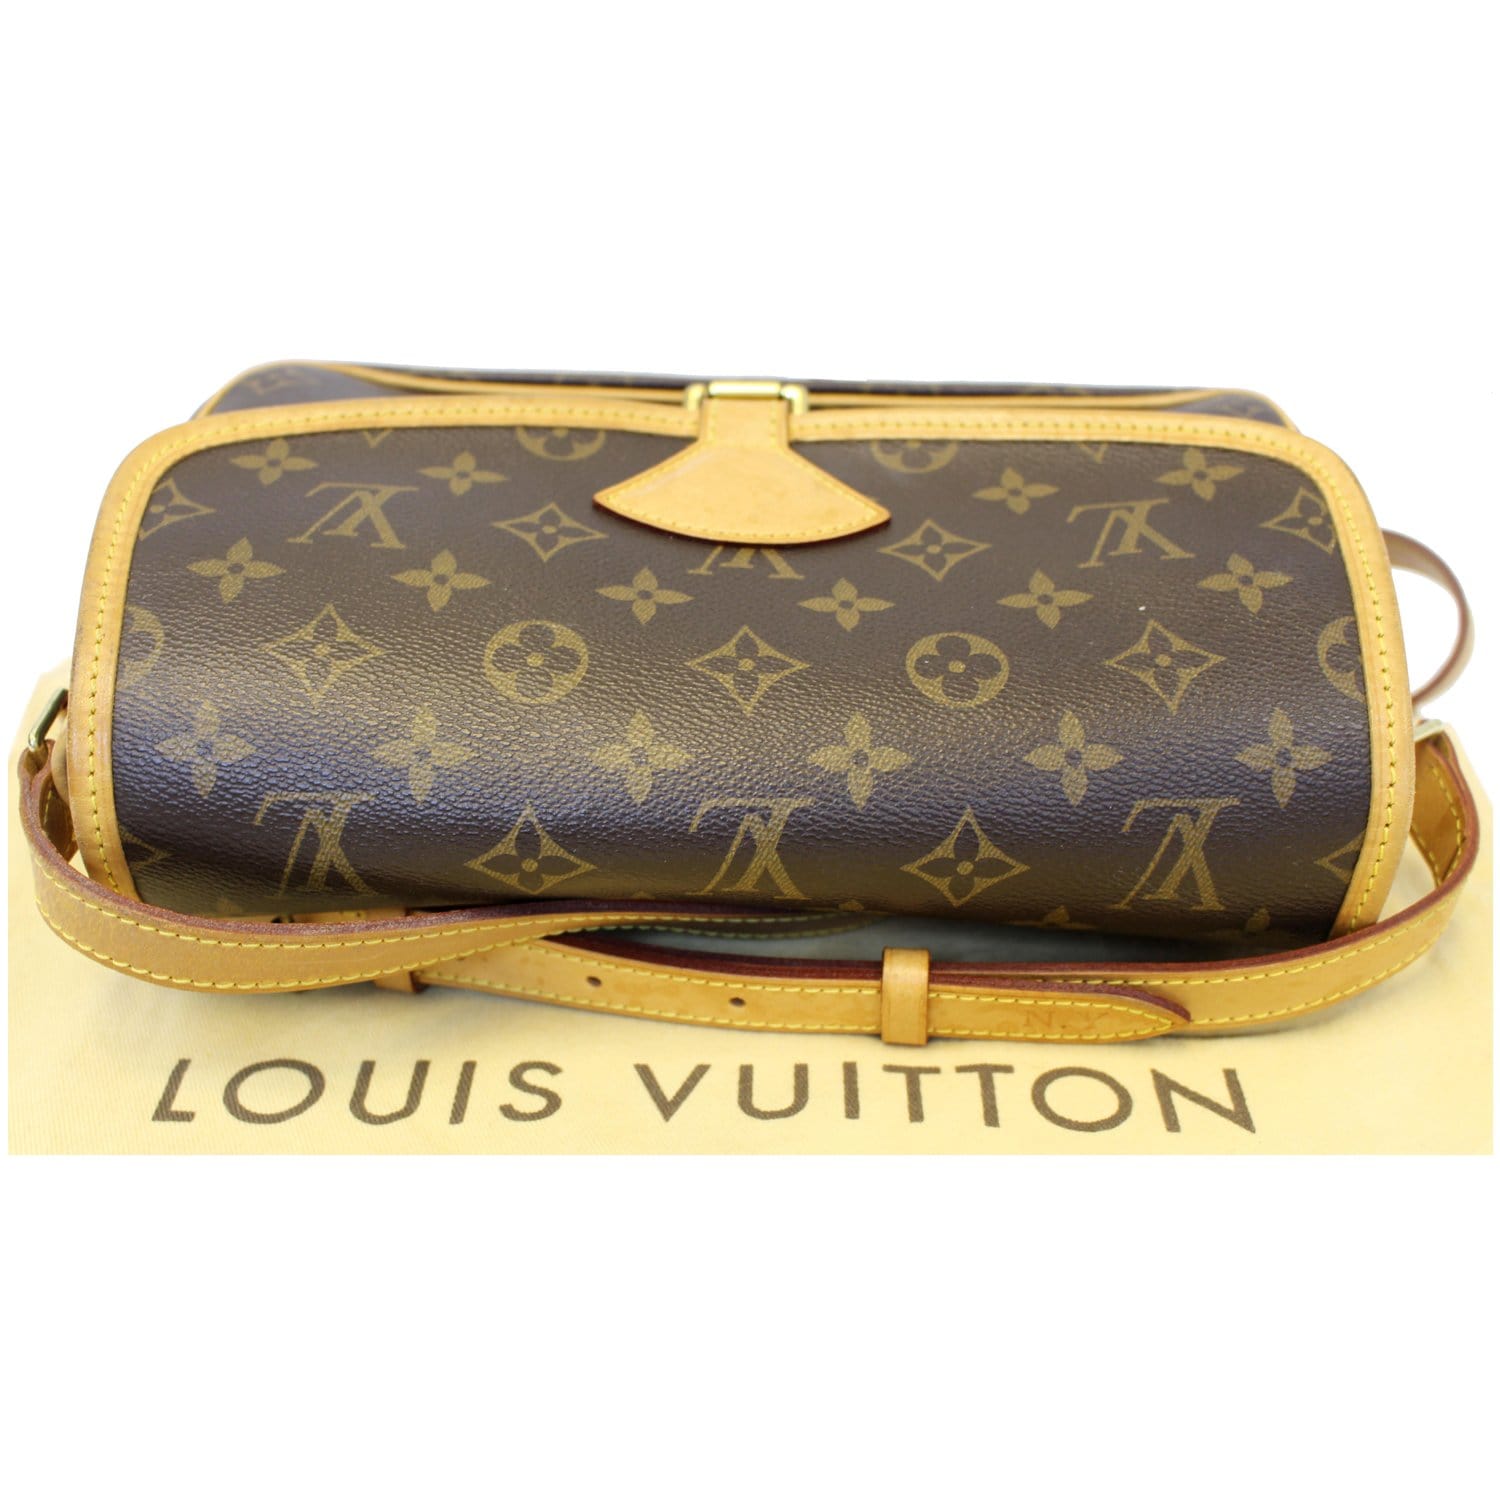 Louis Vuitton Sologne Handbag Damier Brown 11472222